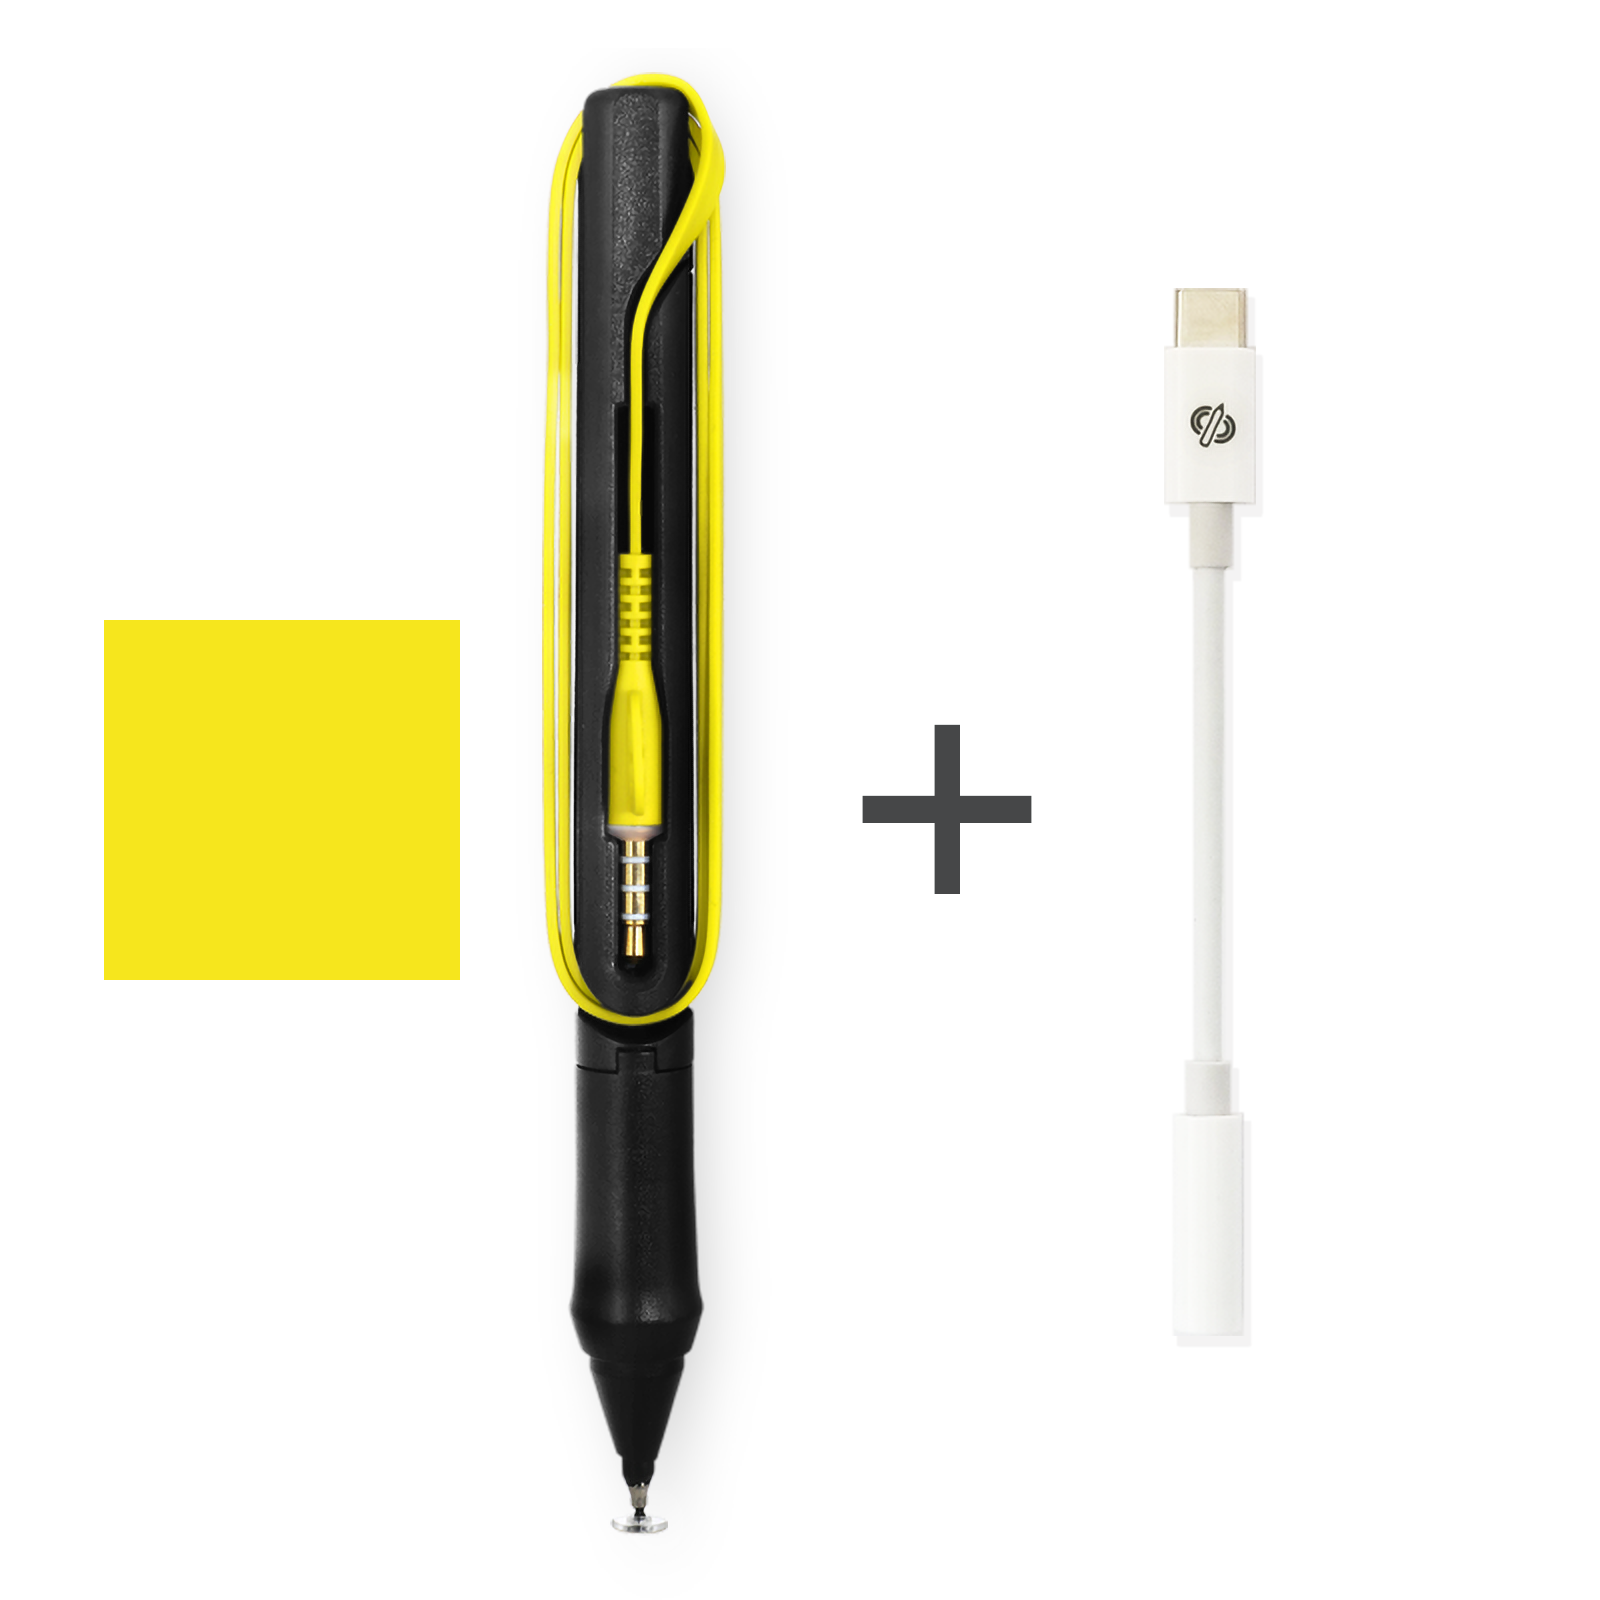 SonarPen smart stylus + USB Type-C adapter bundle for Windwos computer